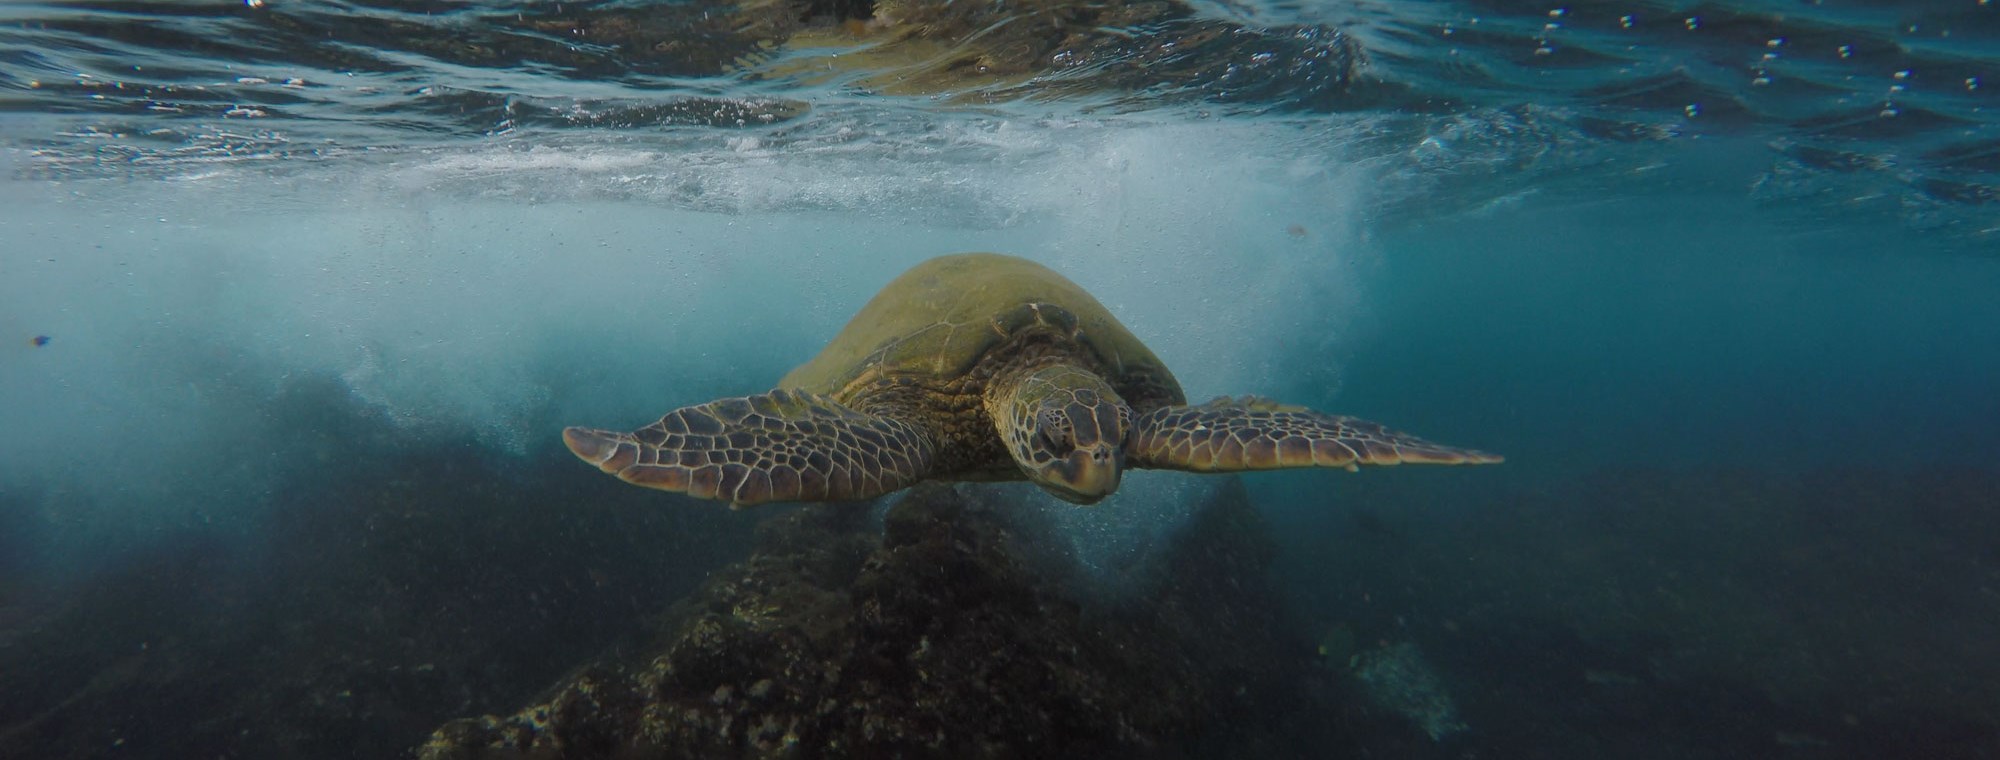 Hawaii tours with sea turtles